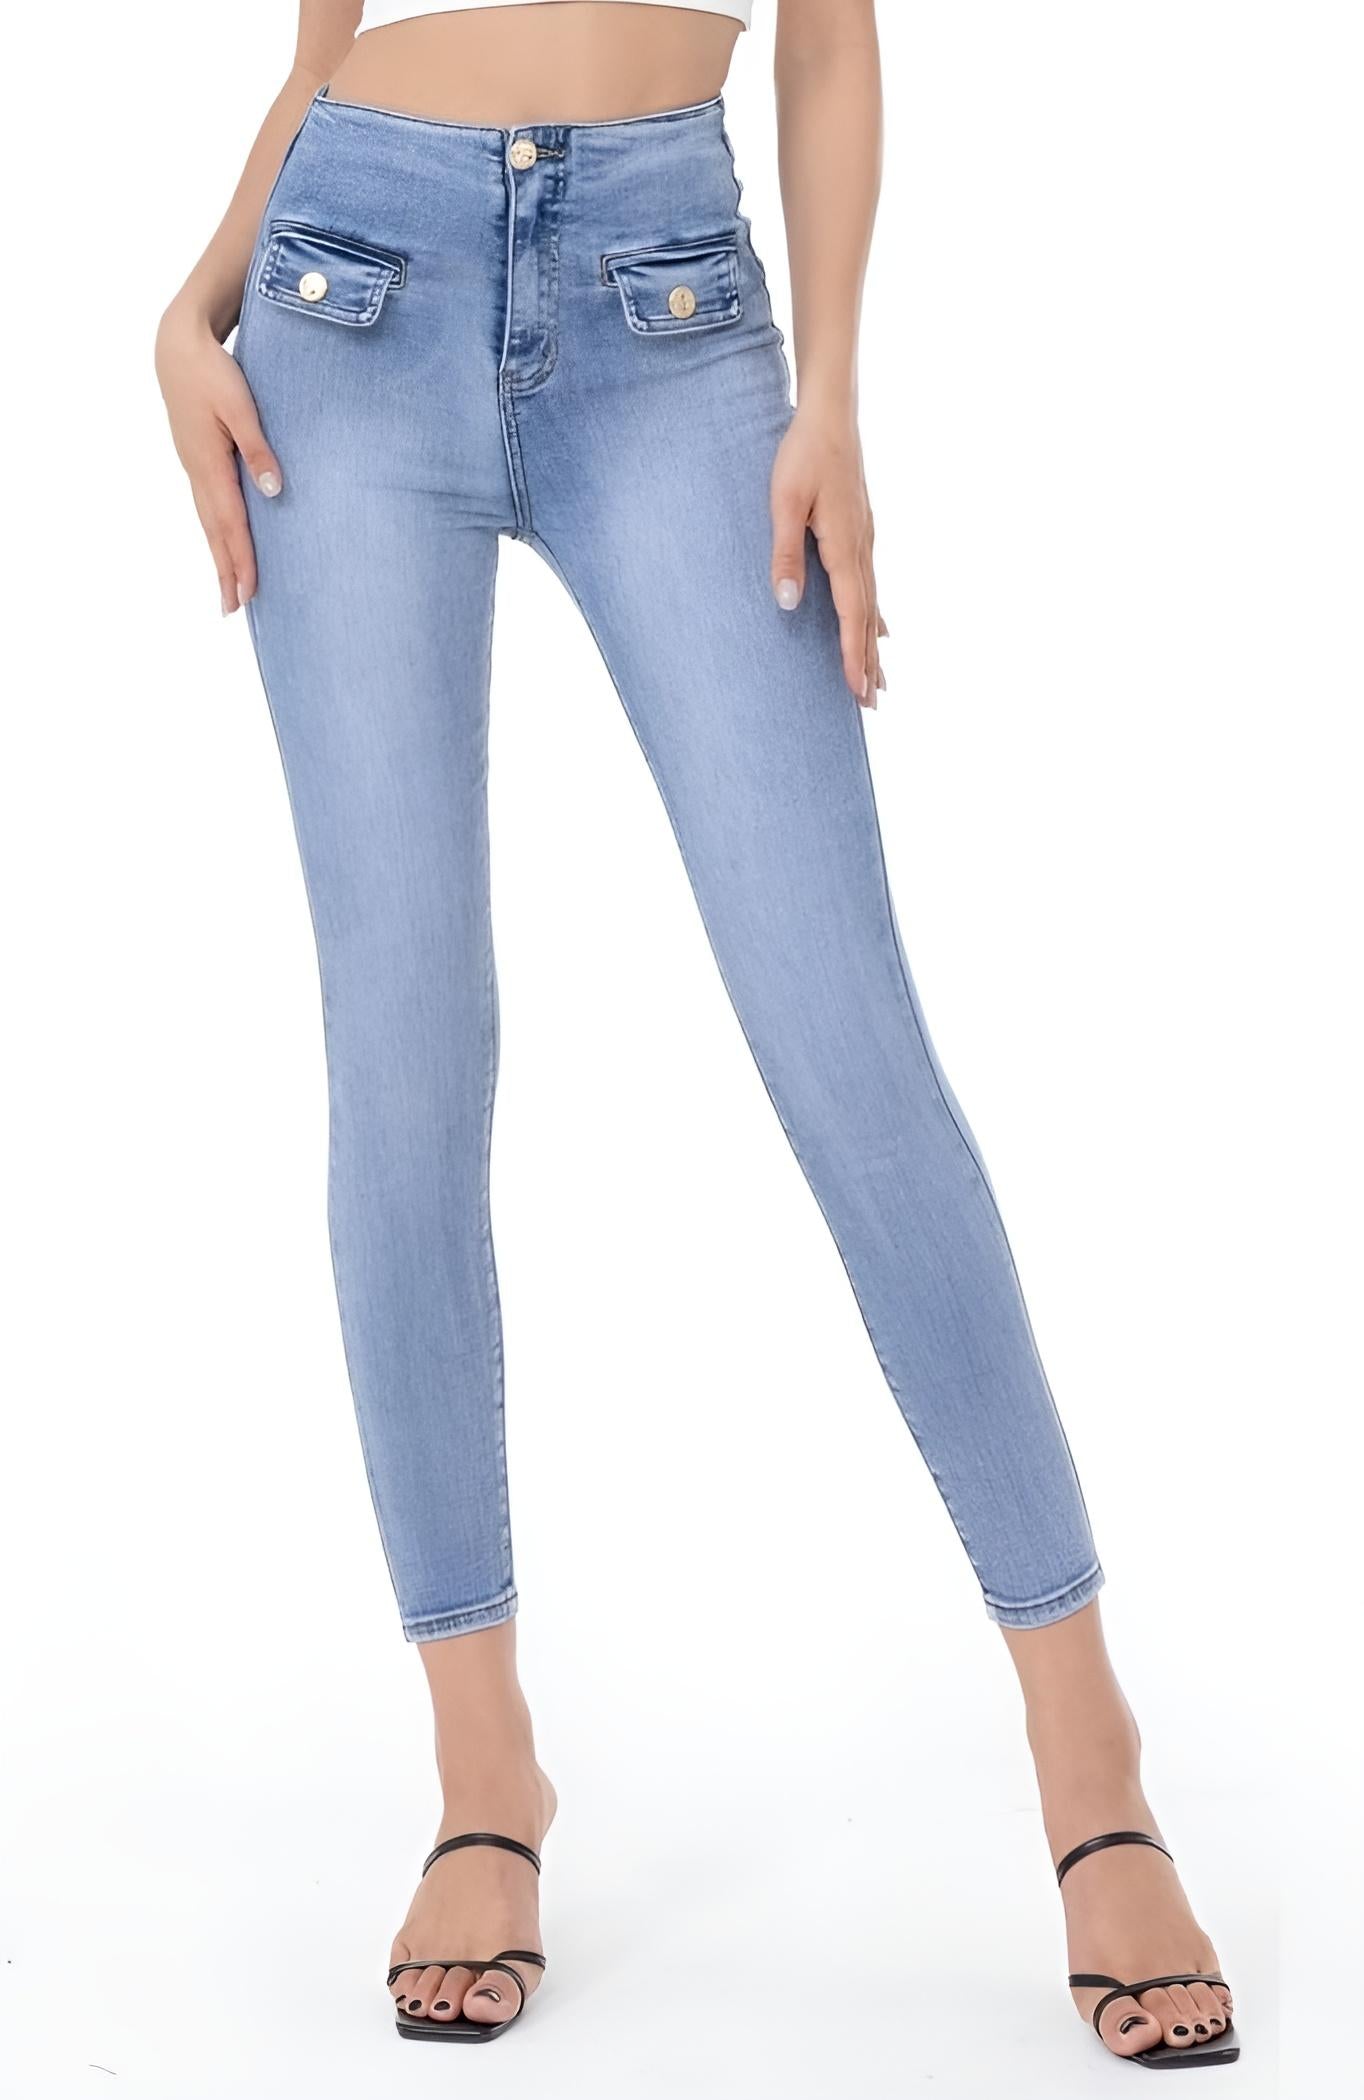 Pantalone Donna Jeans Bottone Vita Alta Slim Skinny Aderente Casual Easy - LE STYLE DE PARIS